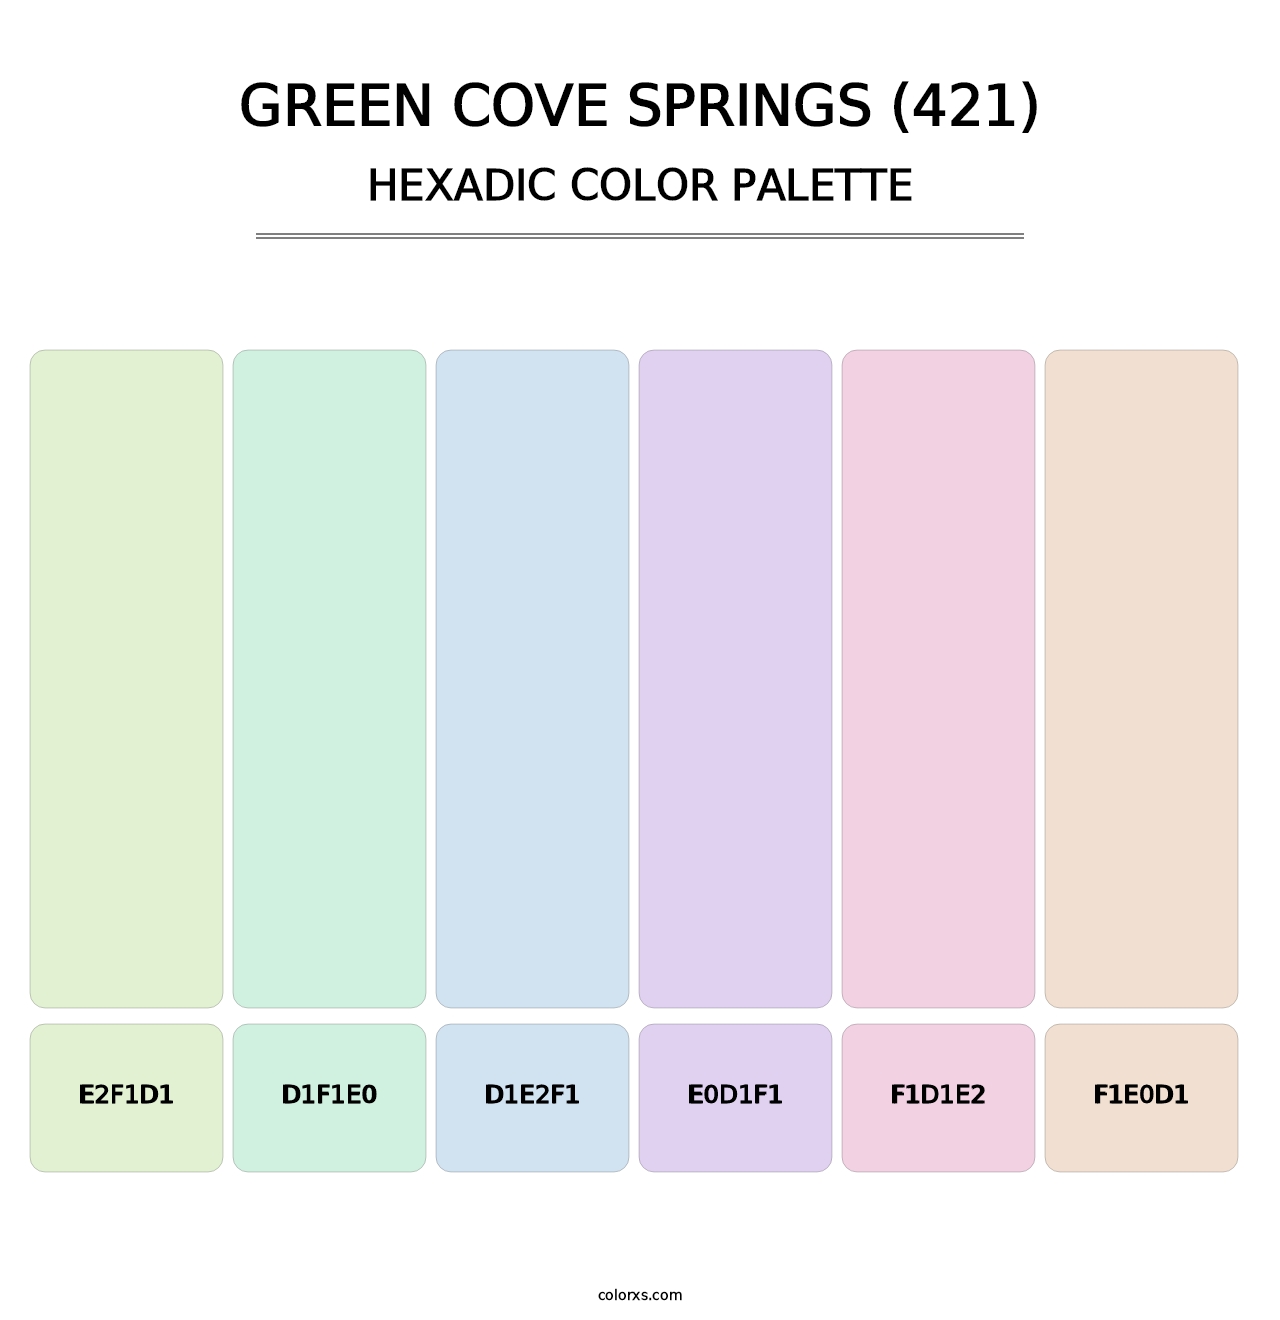 Green Cove Springs (421) - Hexadic Color Palette